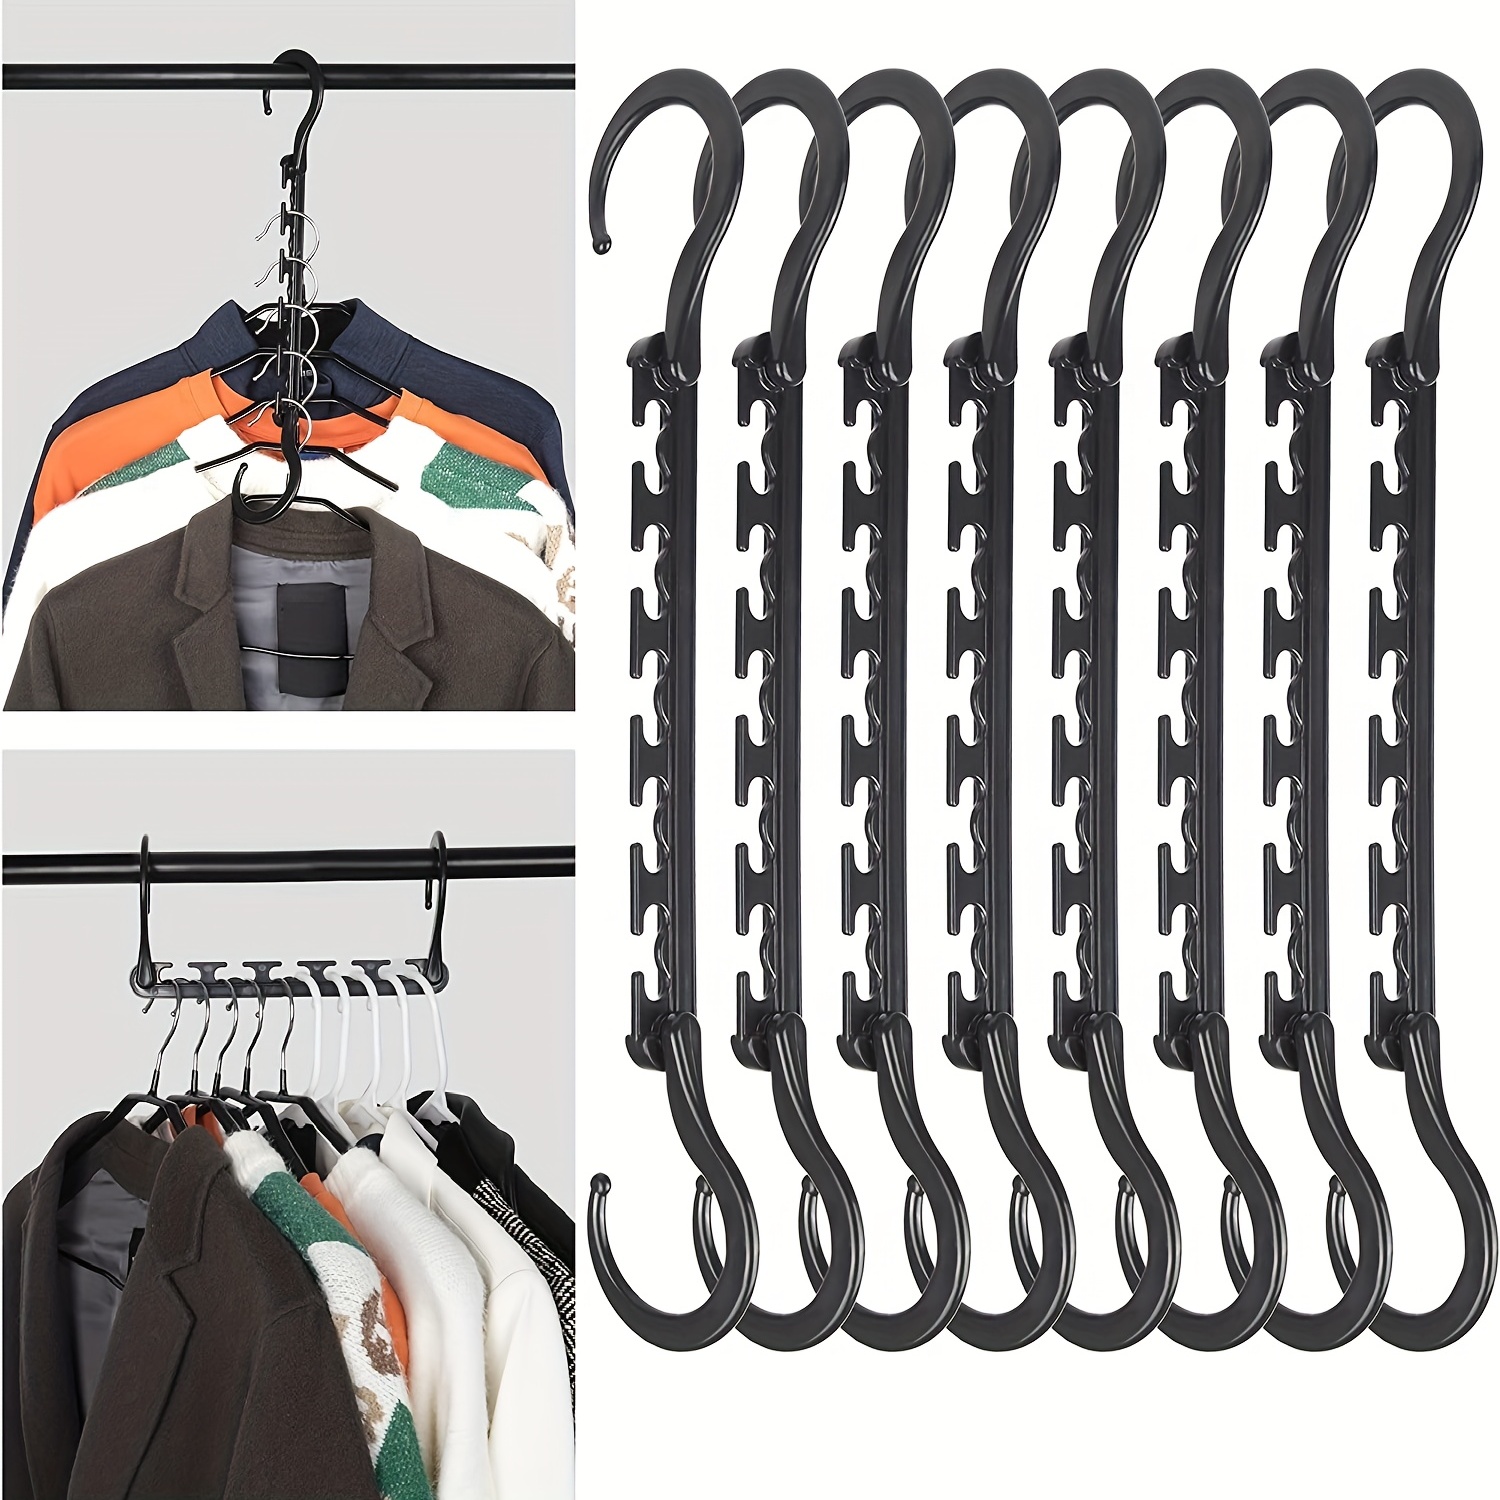 5pcs Clothes Hanger Connector Hooks, Magic Hanger Hooks Heavy Duty